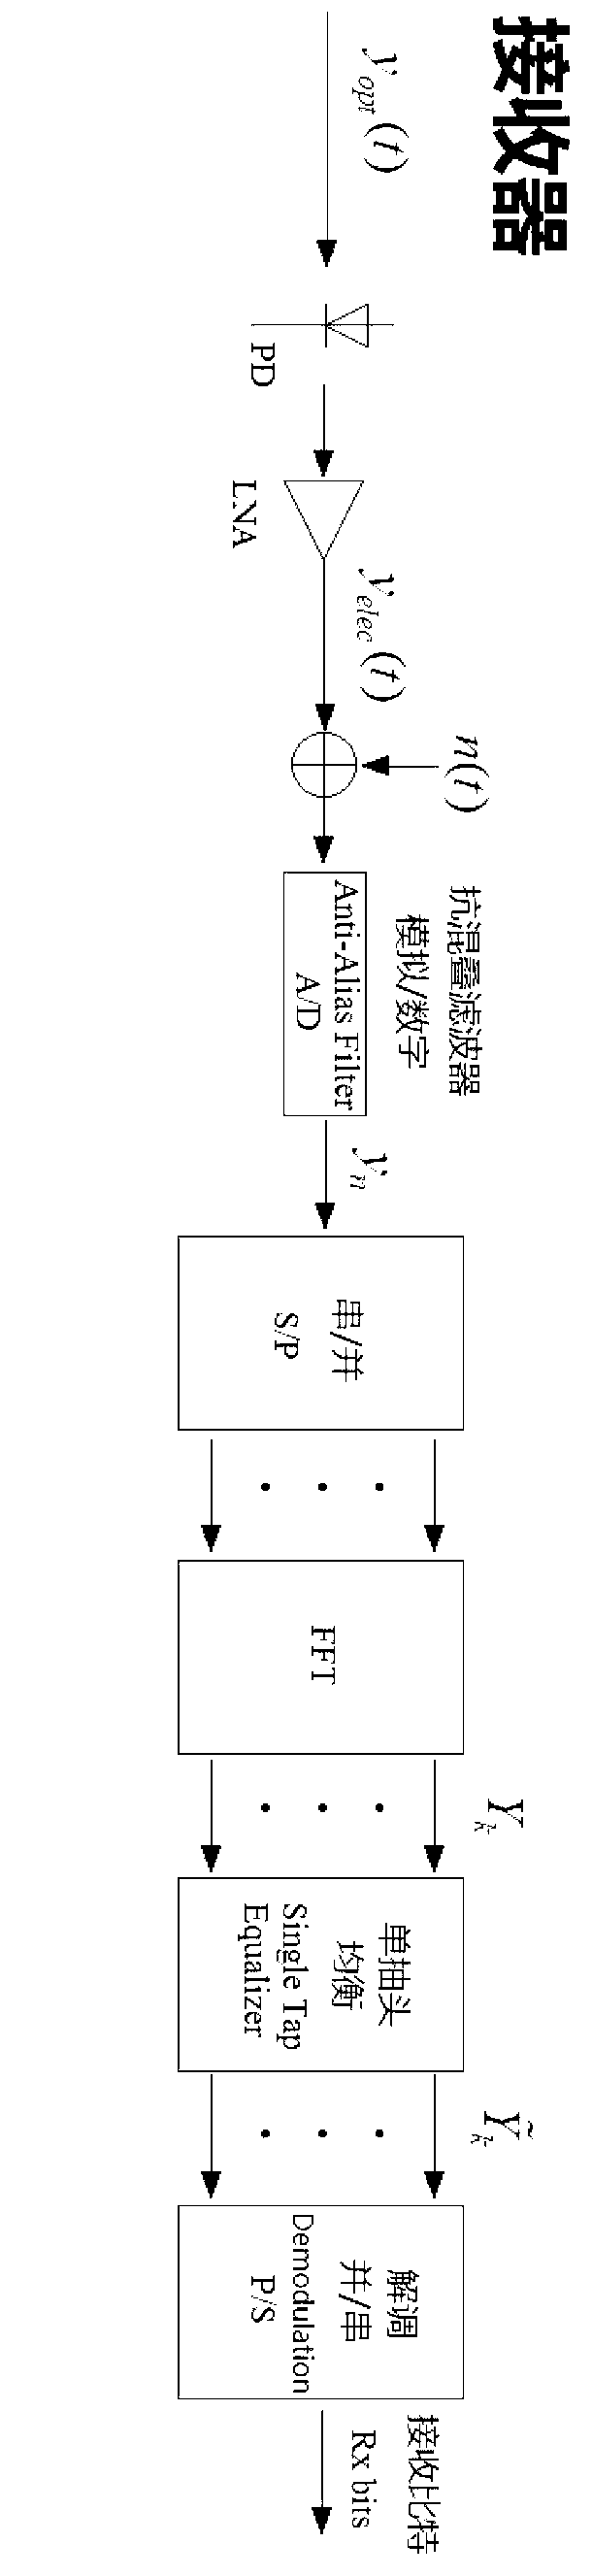 Direct-current offset optimization method of multi-carrier visible light communication system